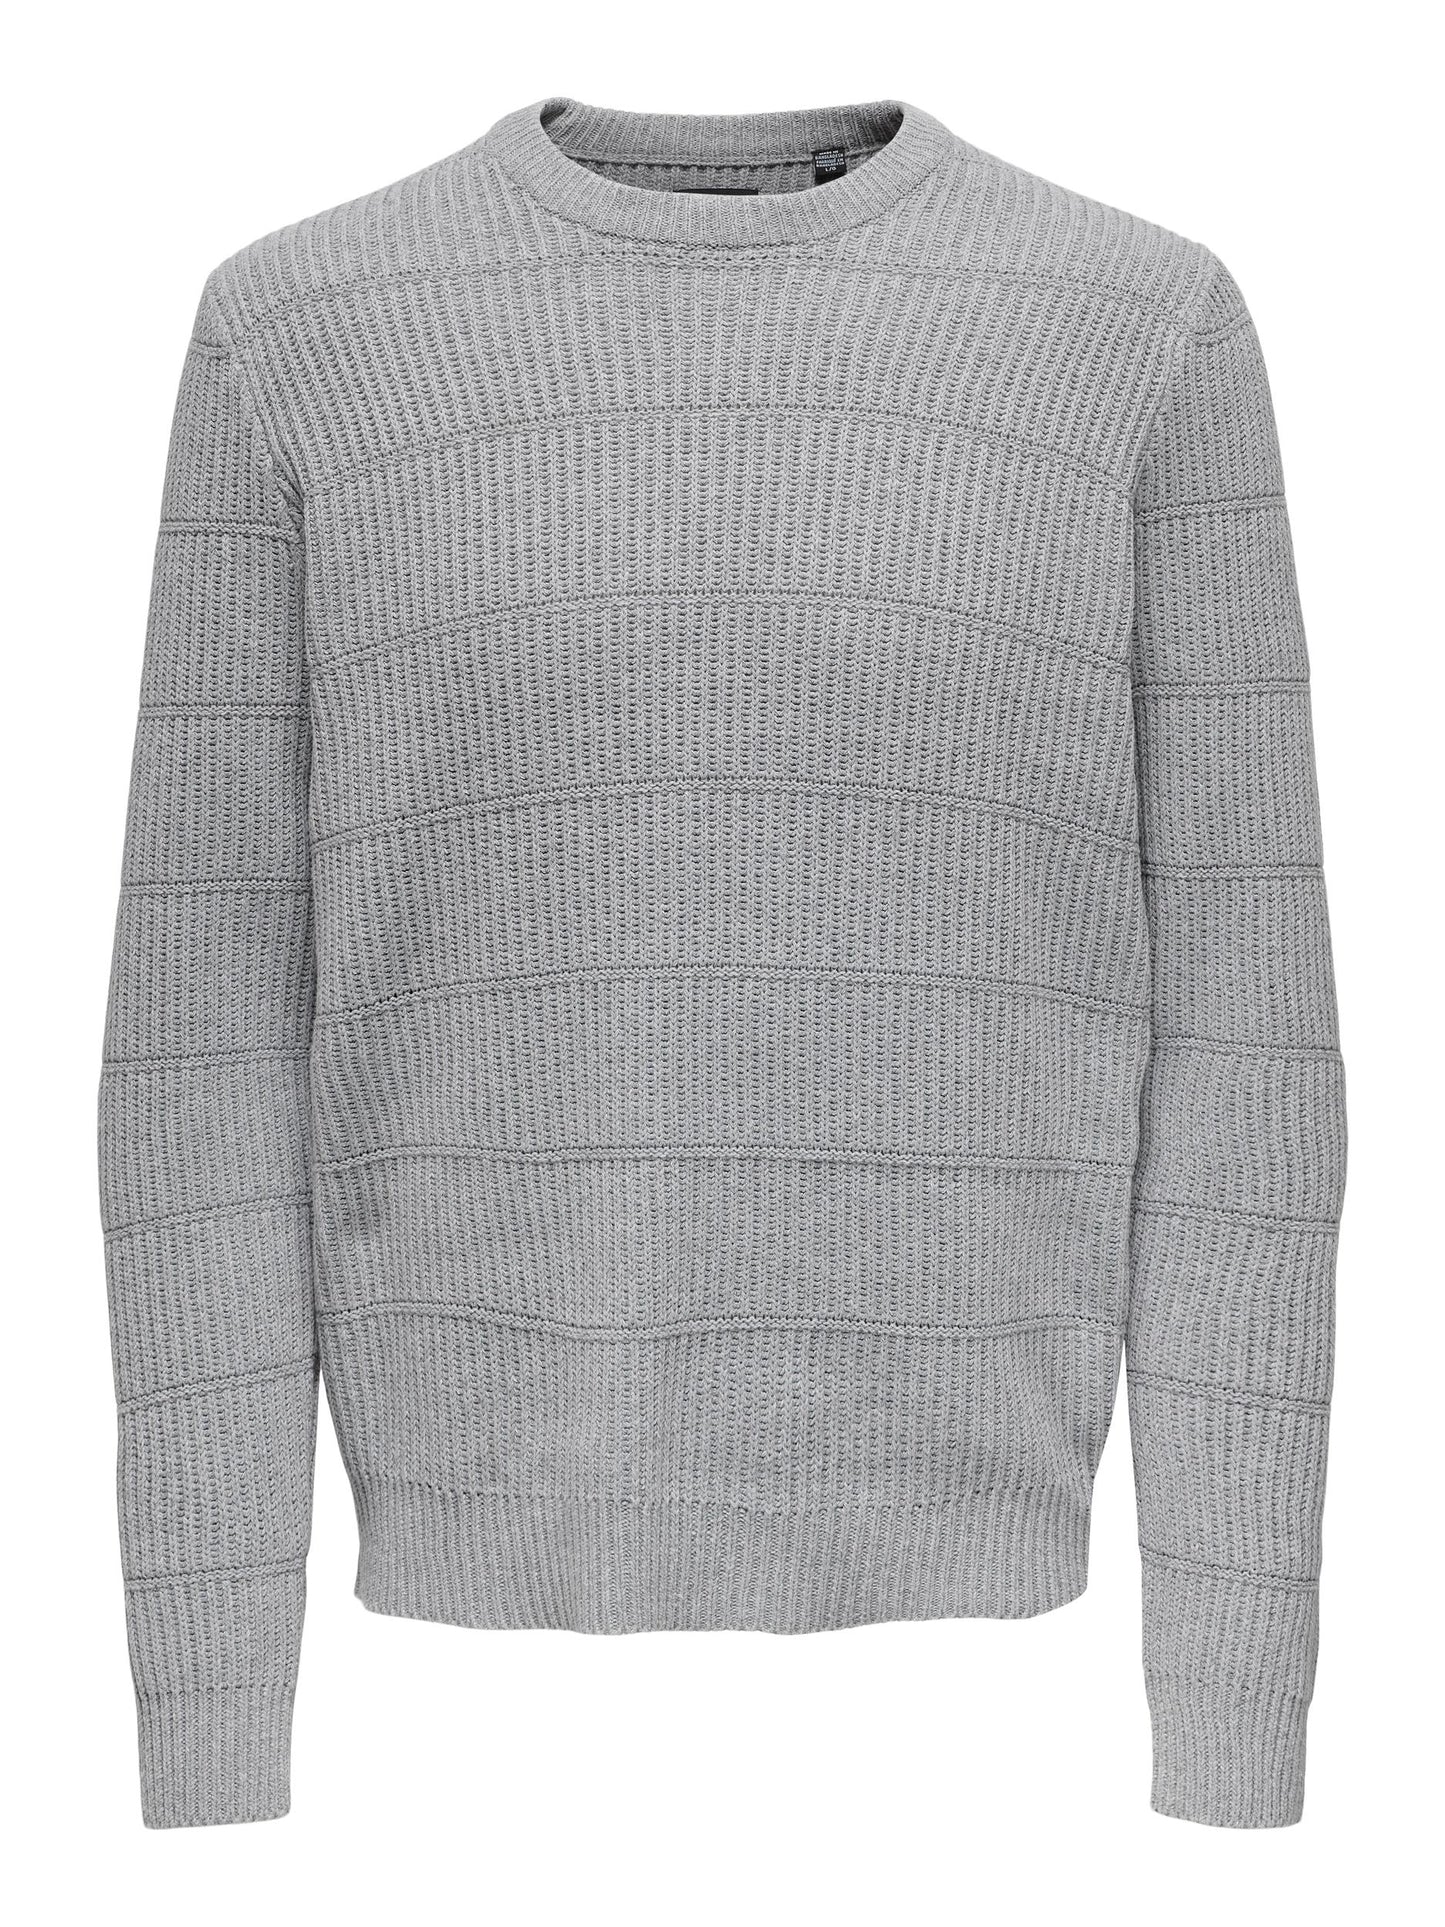 Marshall Knit Sweater